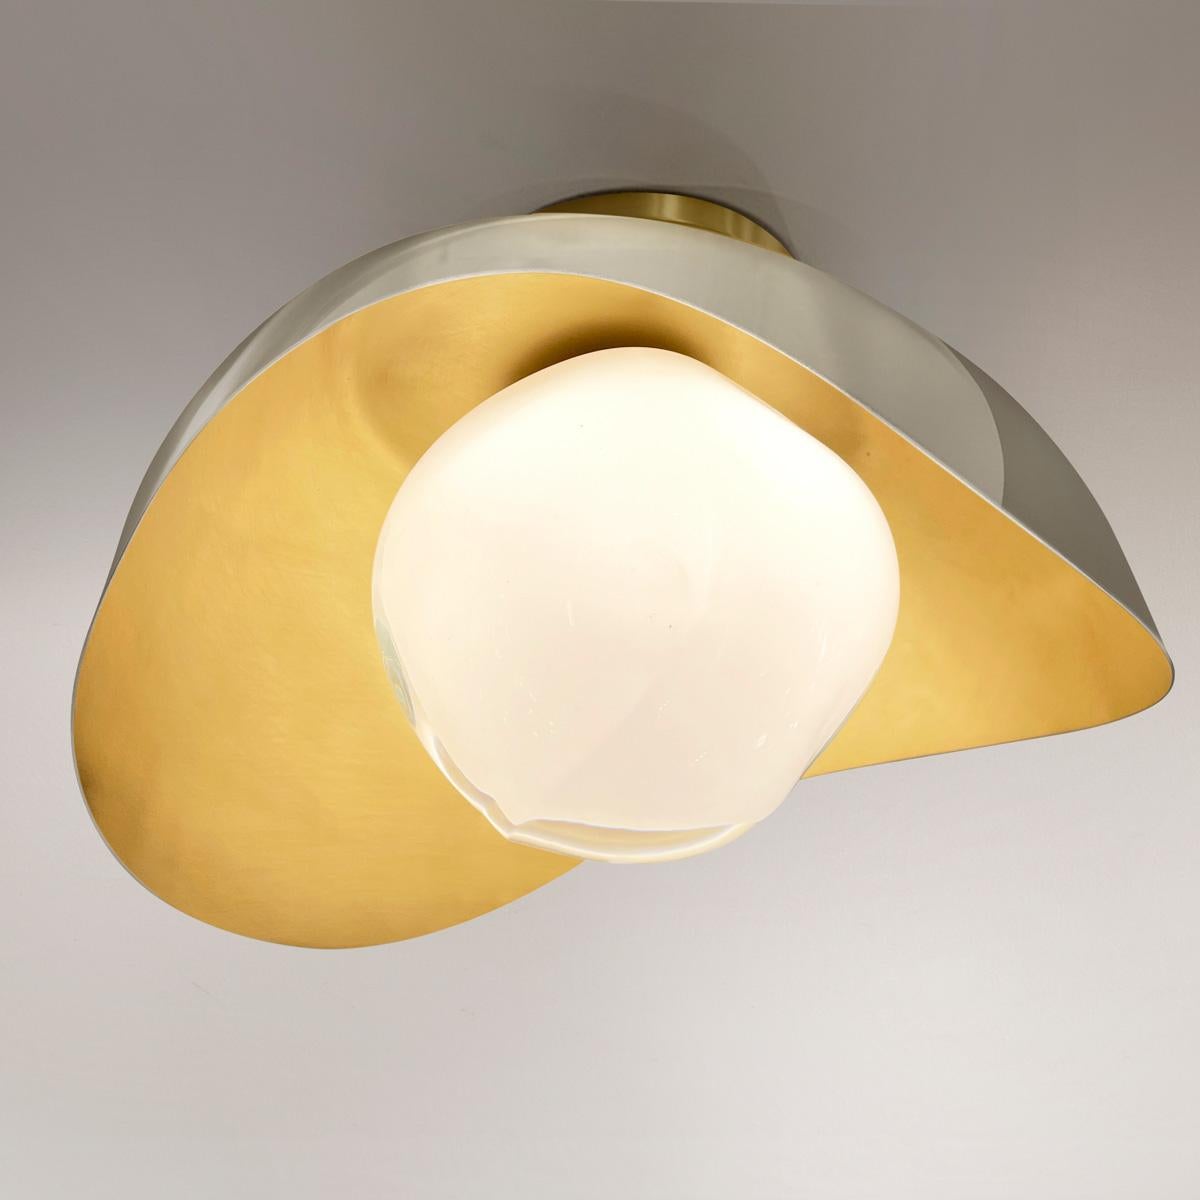 Italian Perla Flushmount Ceiling Light by Gaspare Asaro-Satin Brass/Polished Nickel For Sale